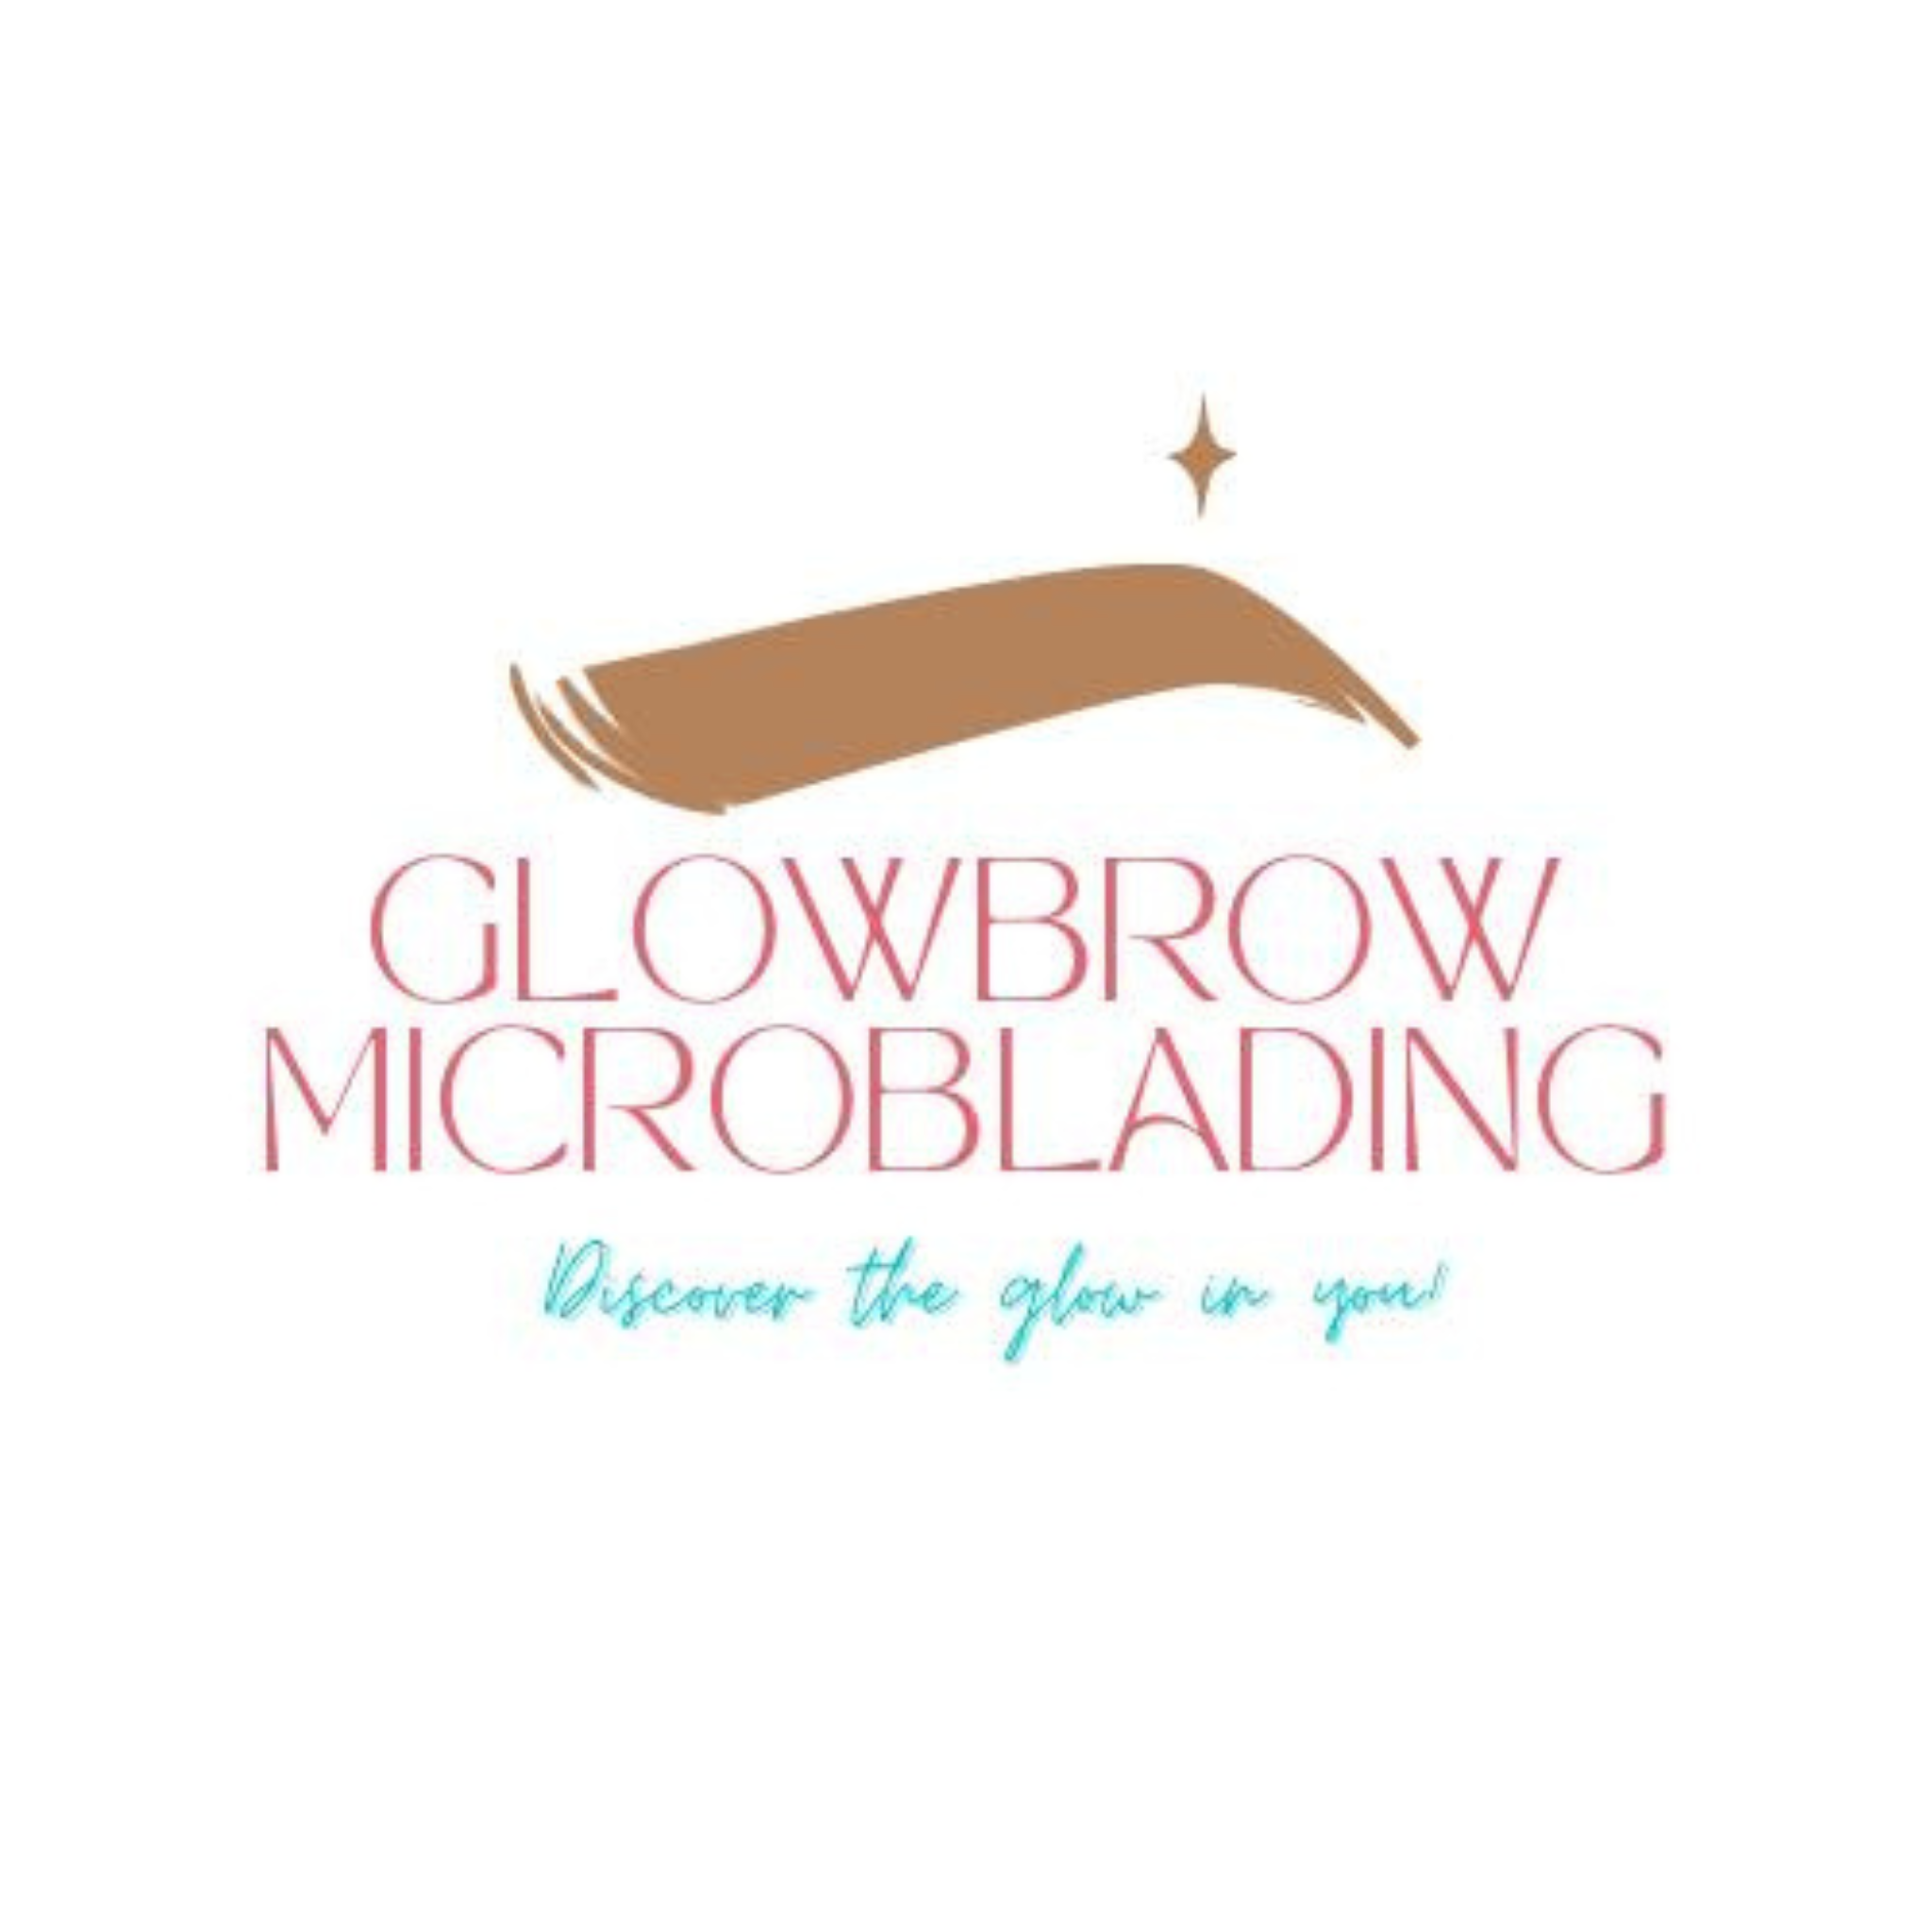 GLOWBROW MICROBLADING